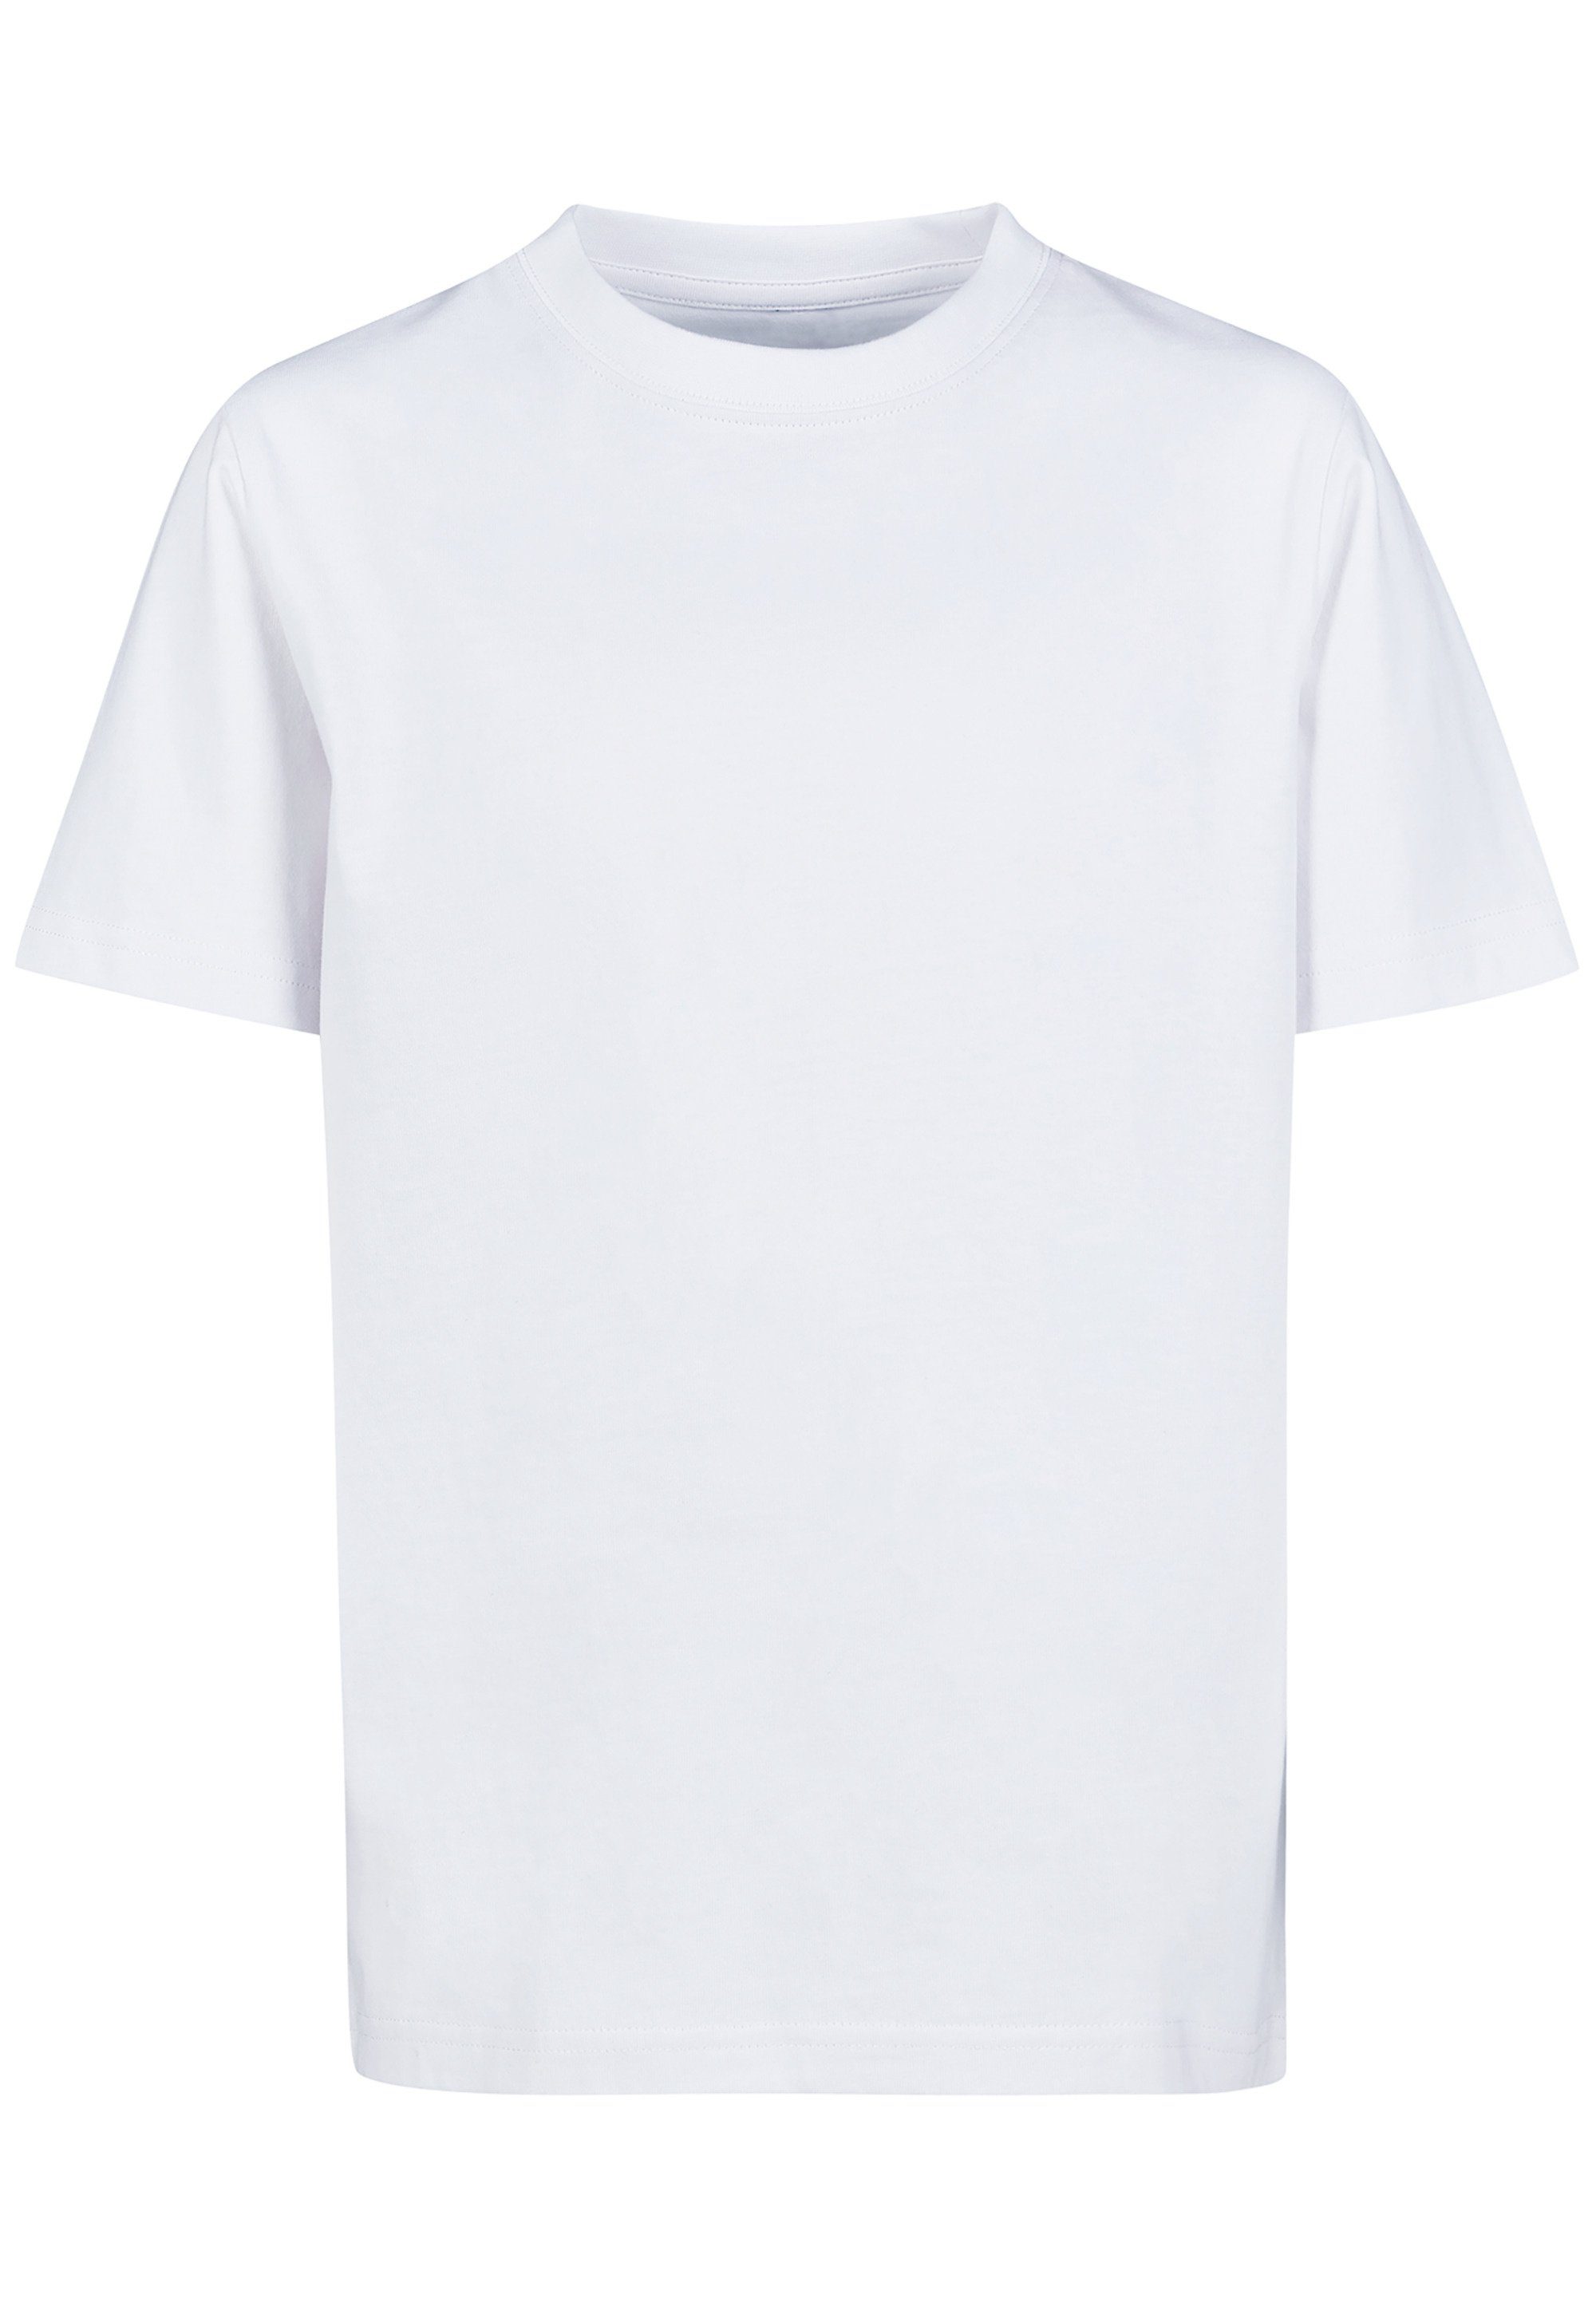 F4NT4STIC T-Shirt SKYLINE PARIS weiß TEE Print UNISEX